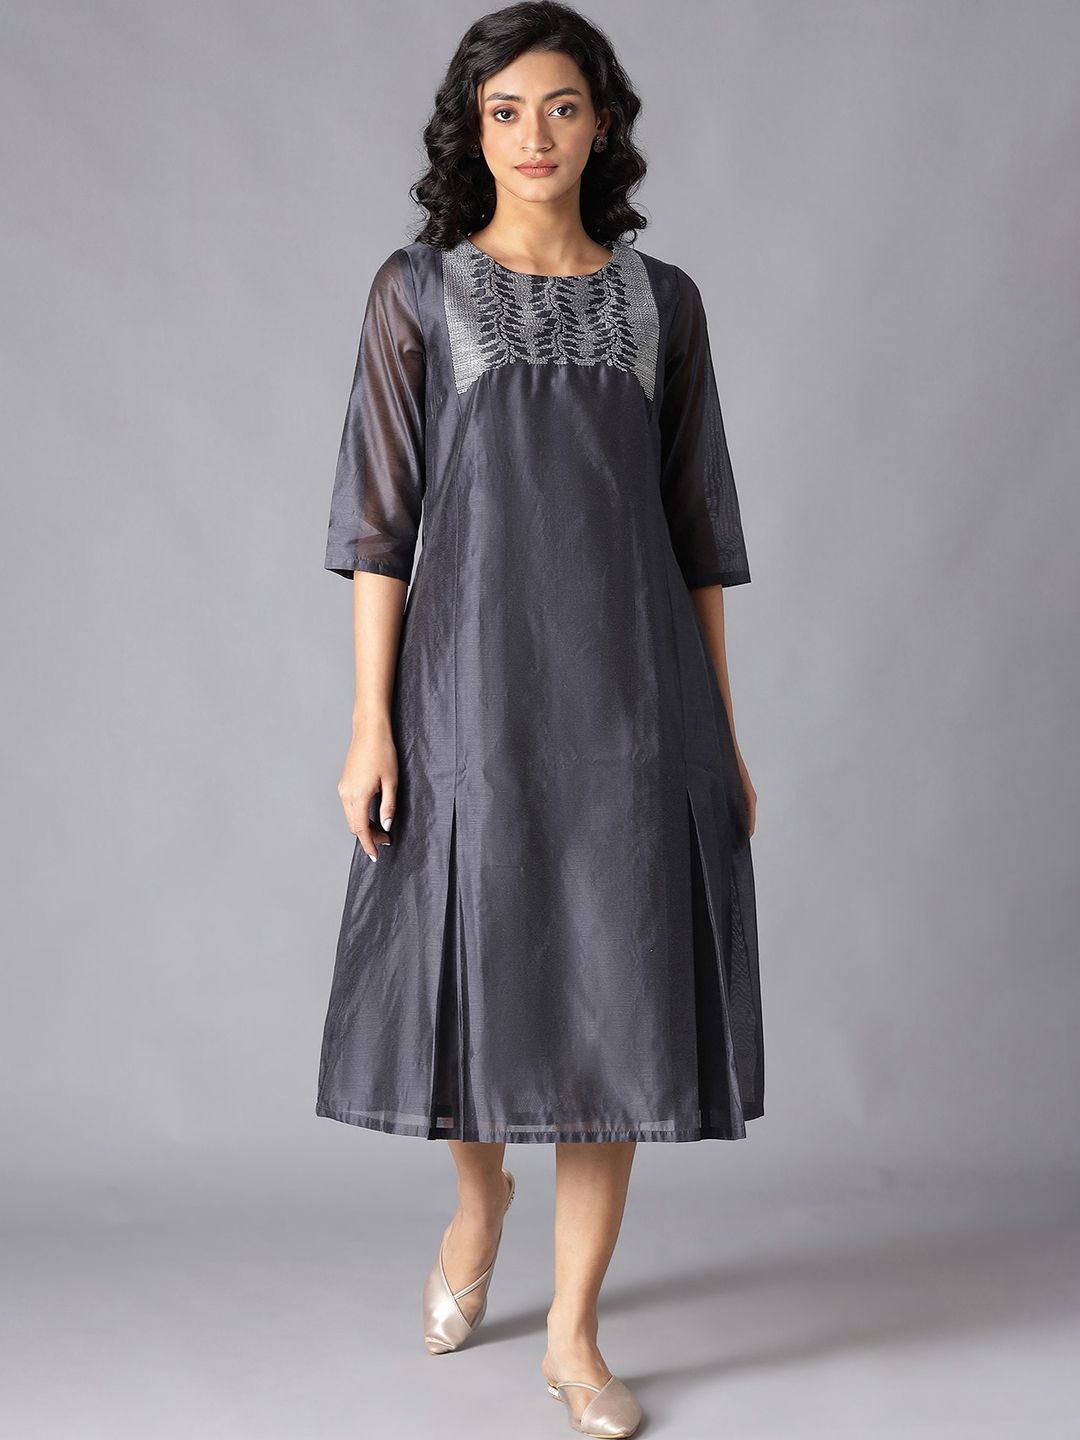 W Women Grey & White Embroidered Thread Work Kurta Price in India